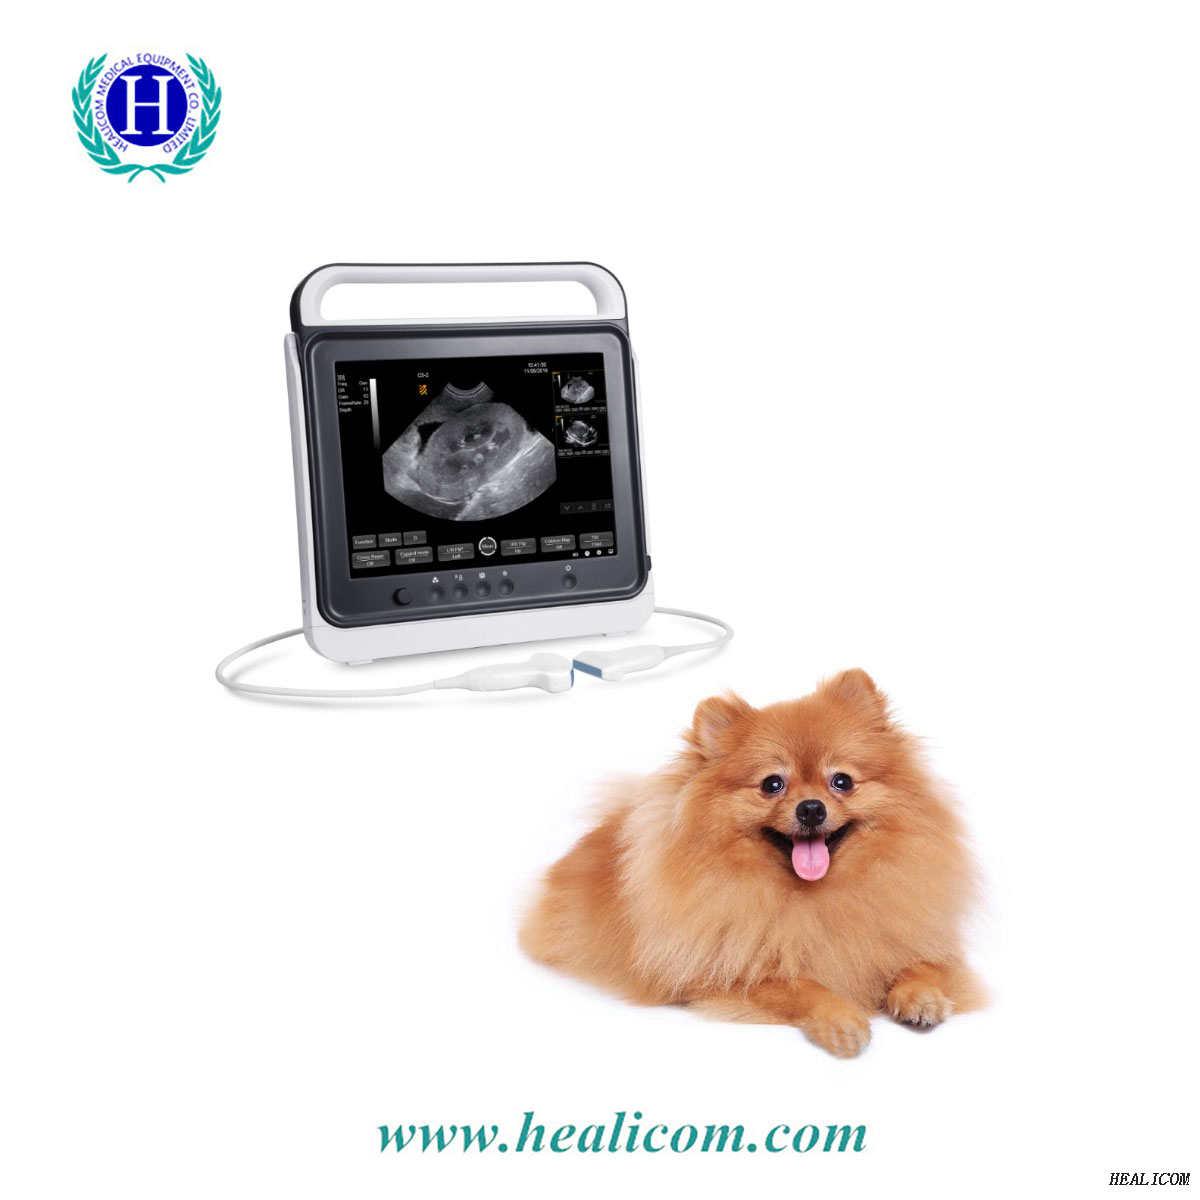 HV-50A Vet Touch B/W Portable Ultrasound Scanner diagnostic machine system